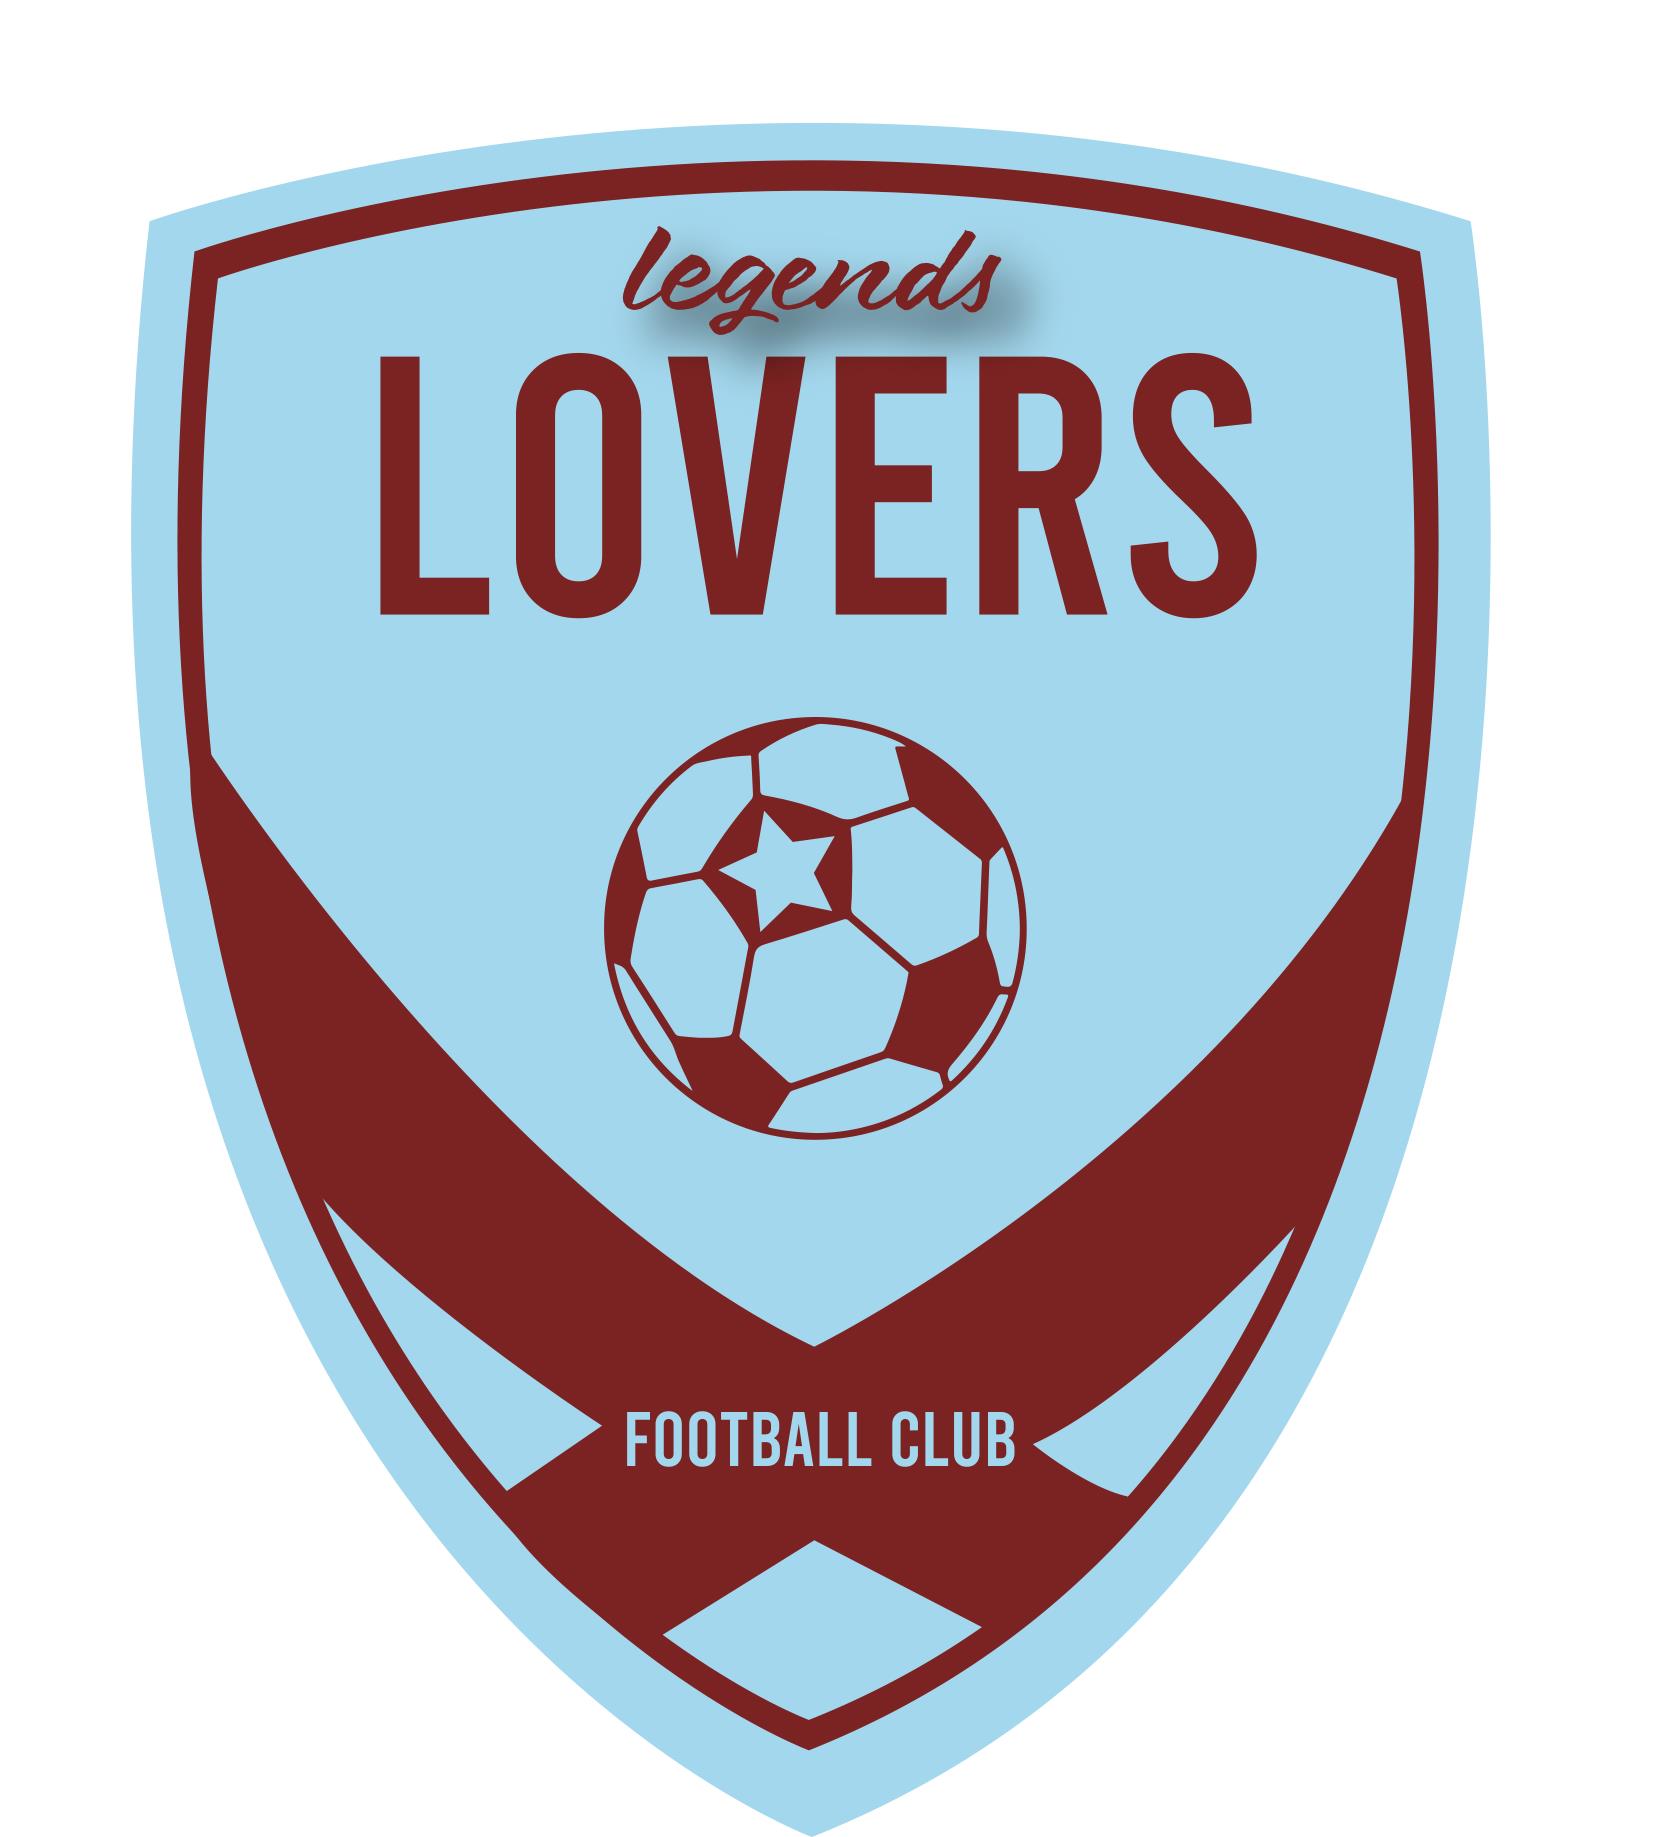 LOVERS Legend F.C.